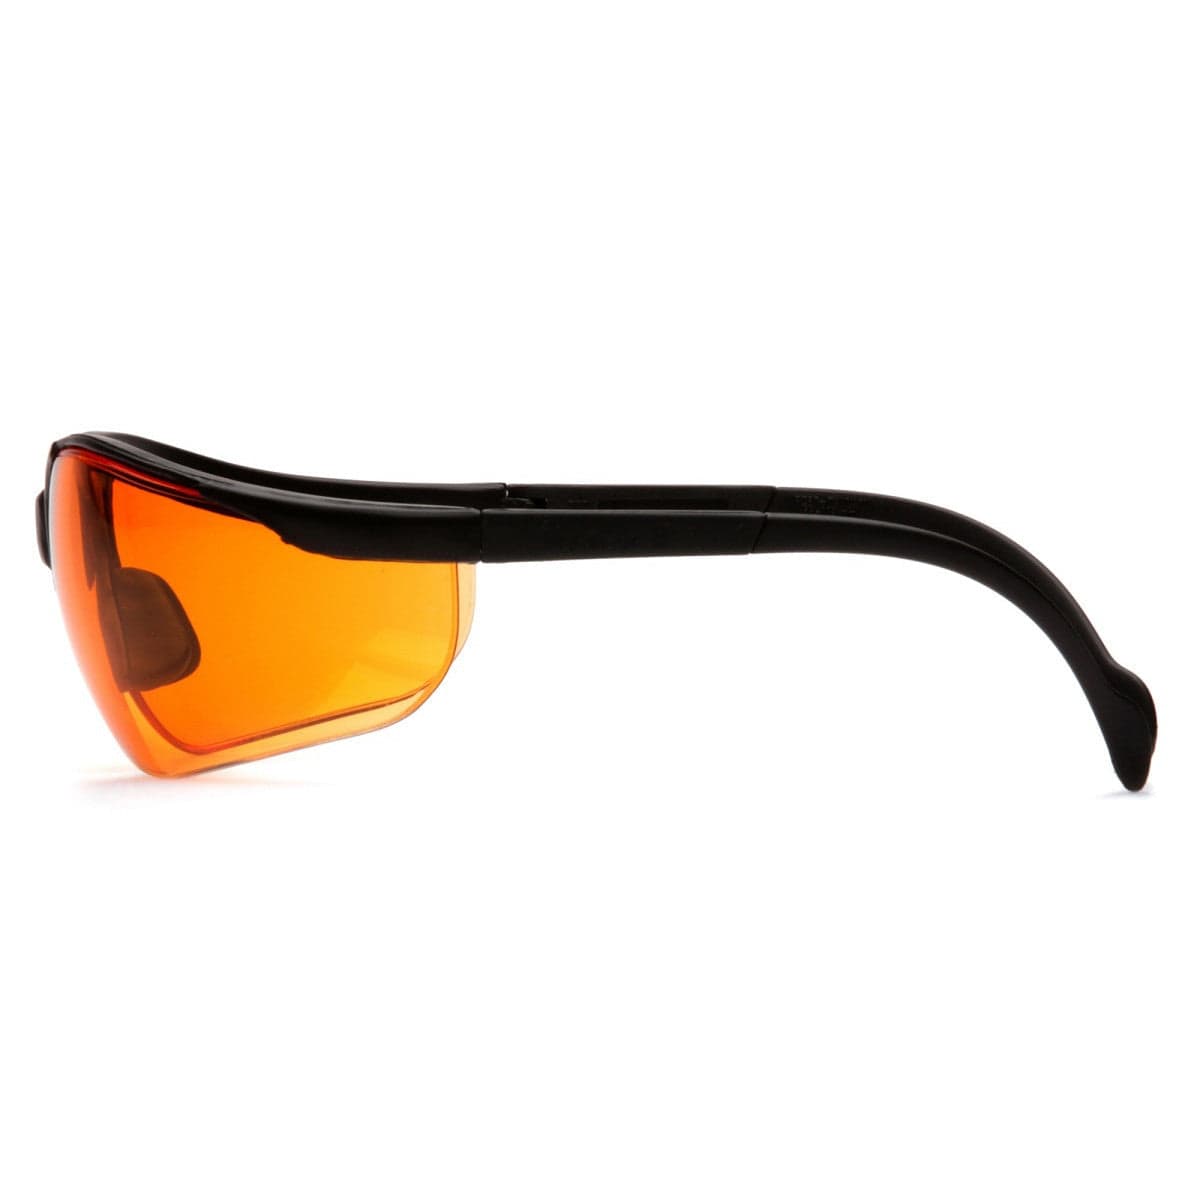 Pyramex Venture 2 Safety Glasses Black Frame Orange Lens SB1840S Side View